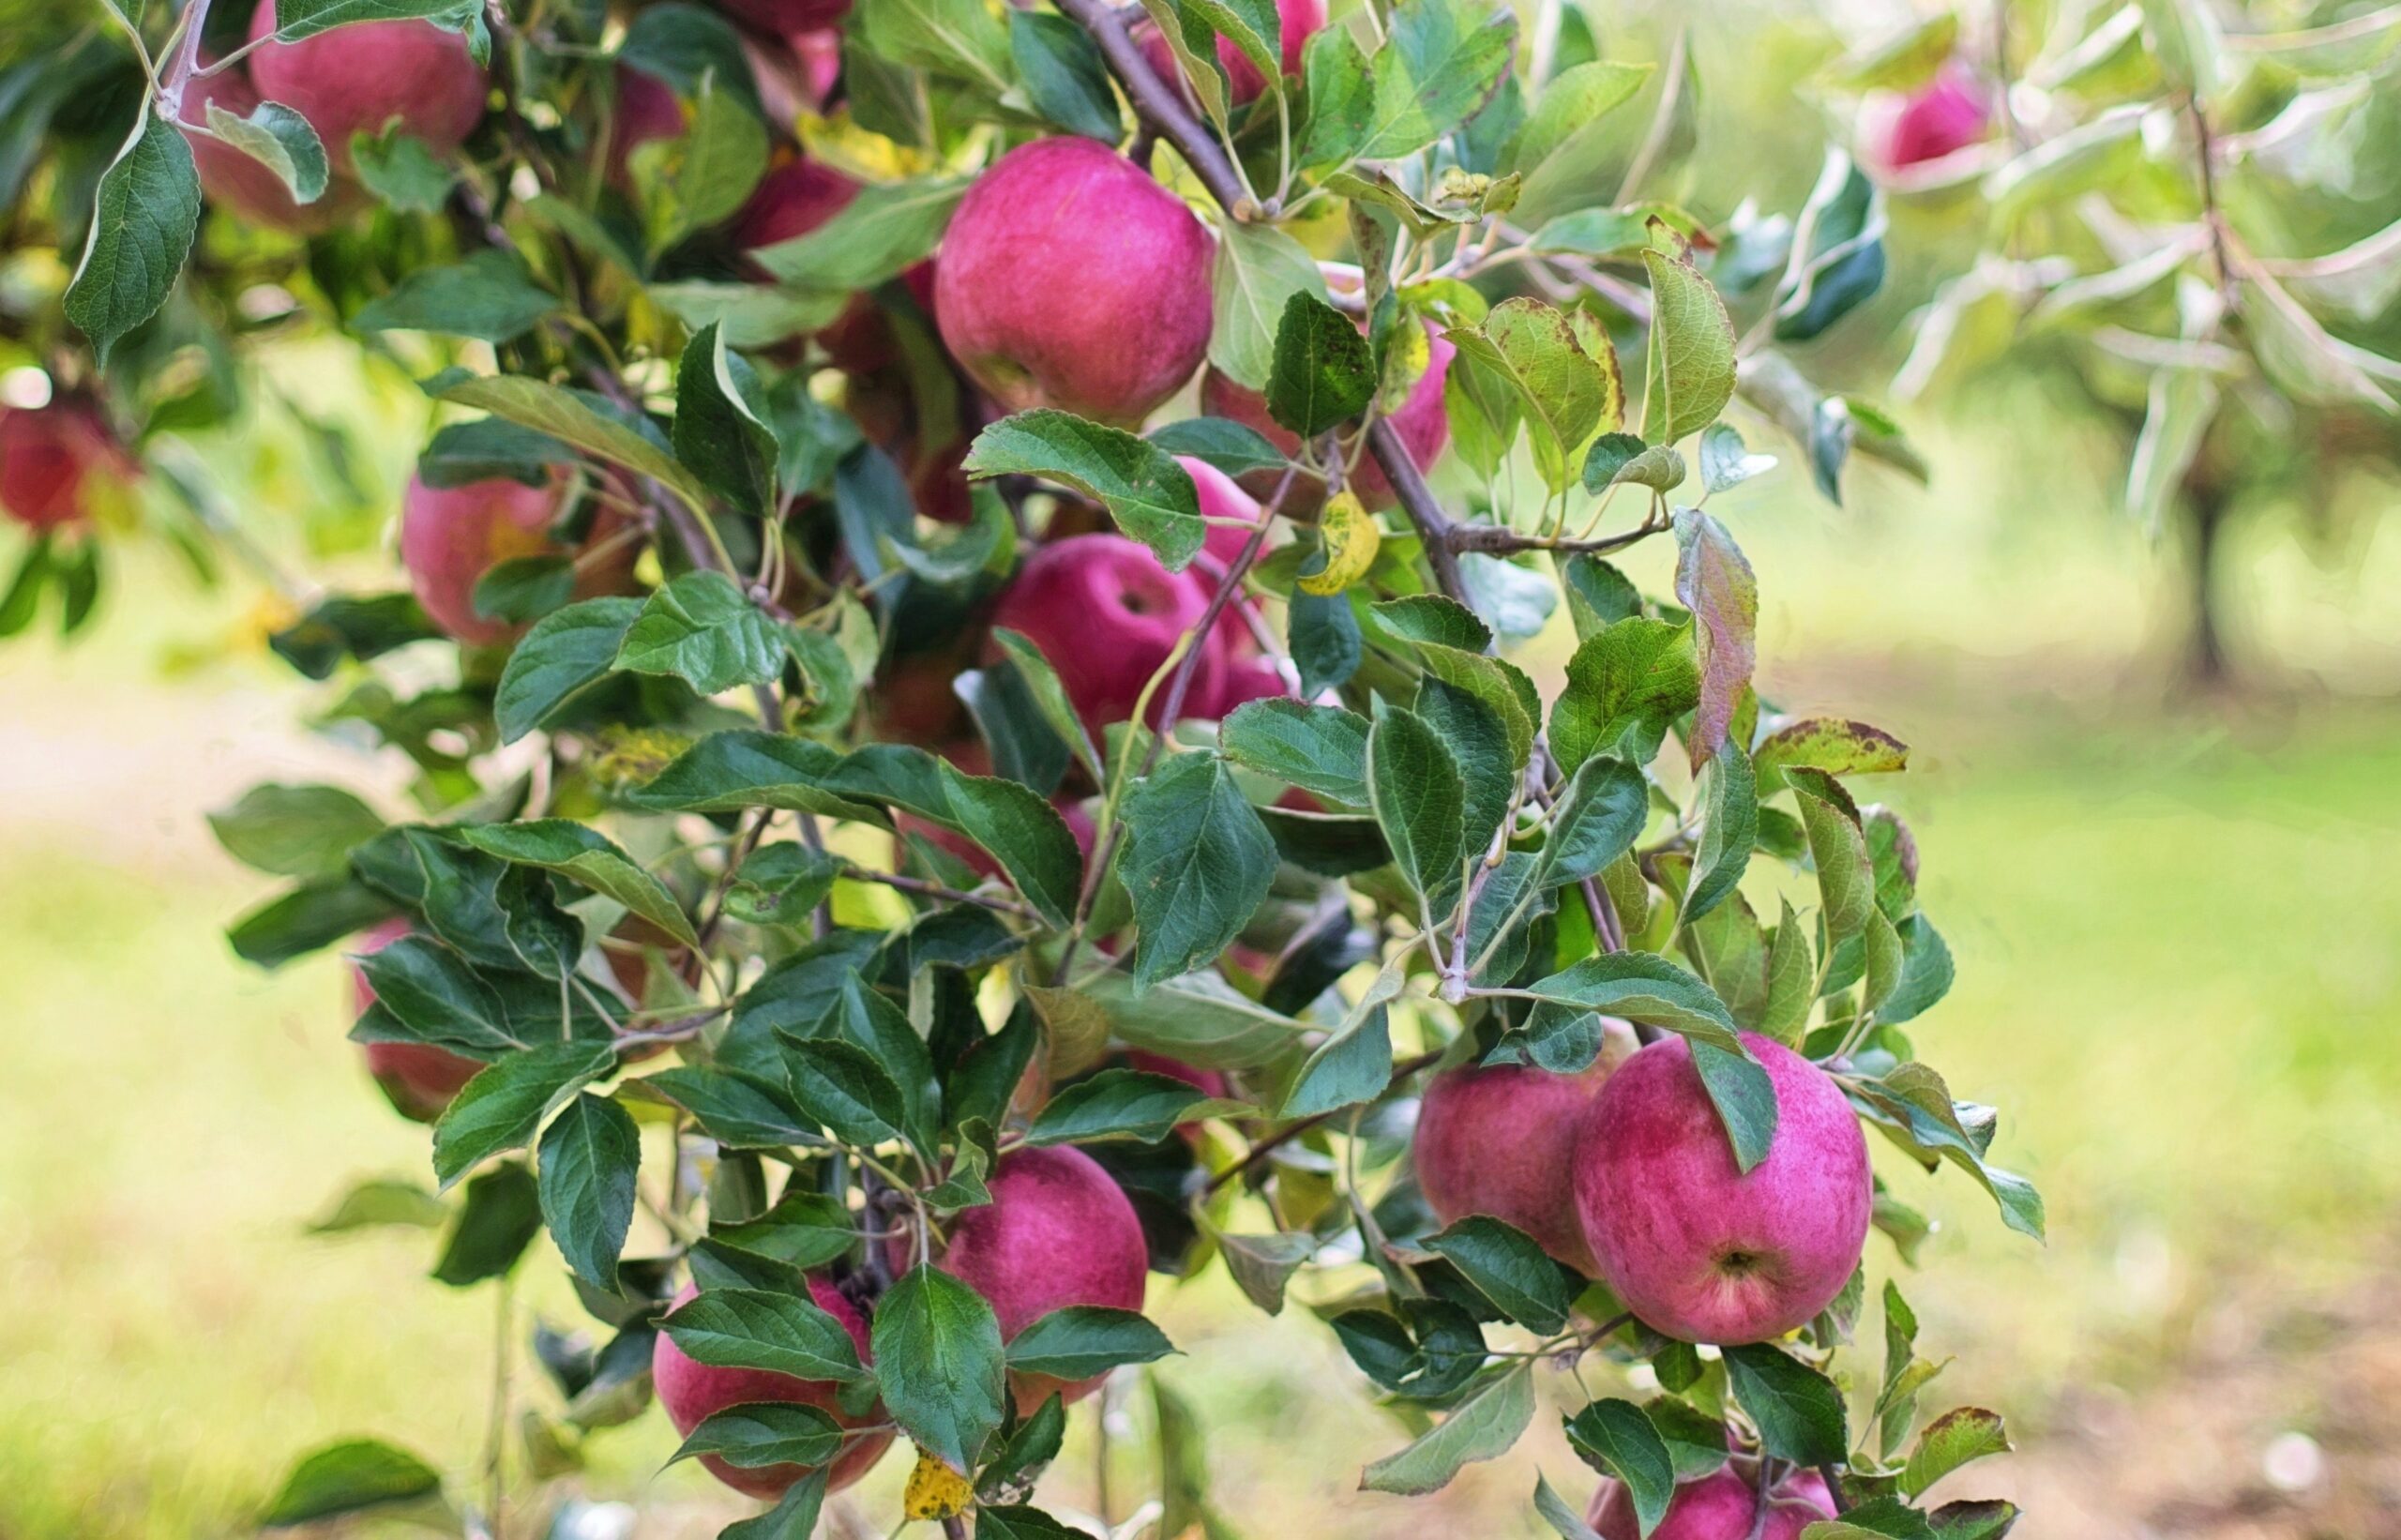 appelbooom met rijpe appels